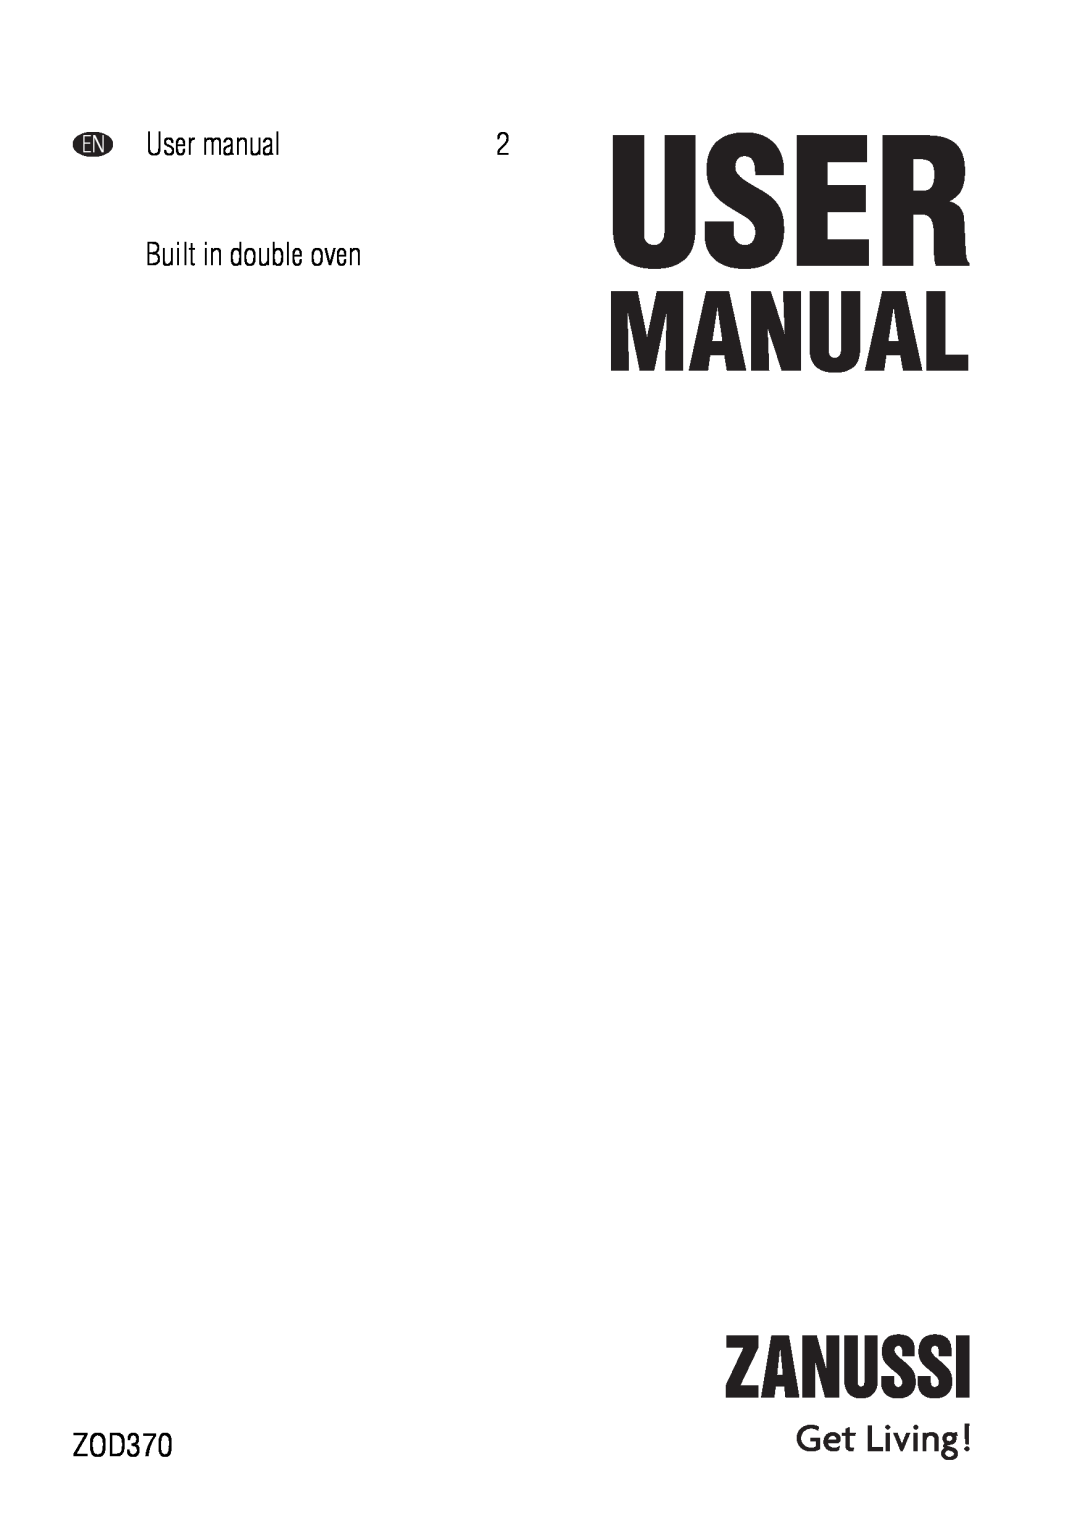 Zanussi ZOD370 user manual User manual, Built in double oven 